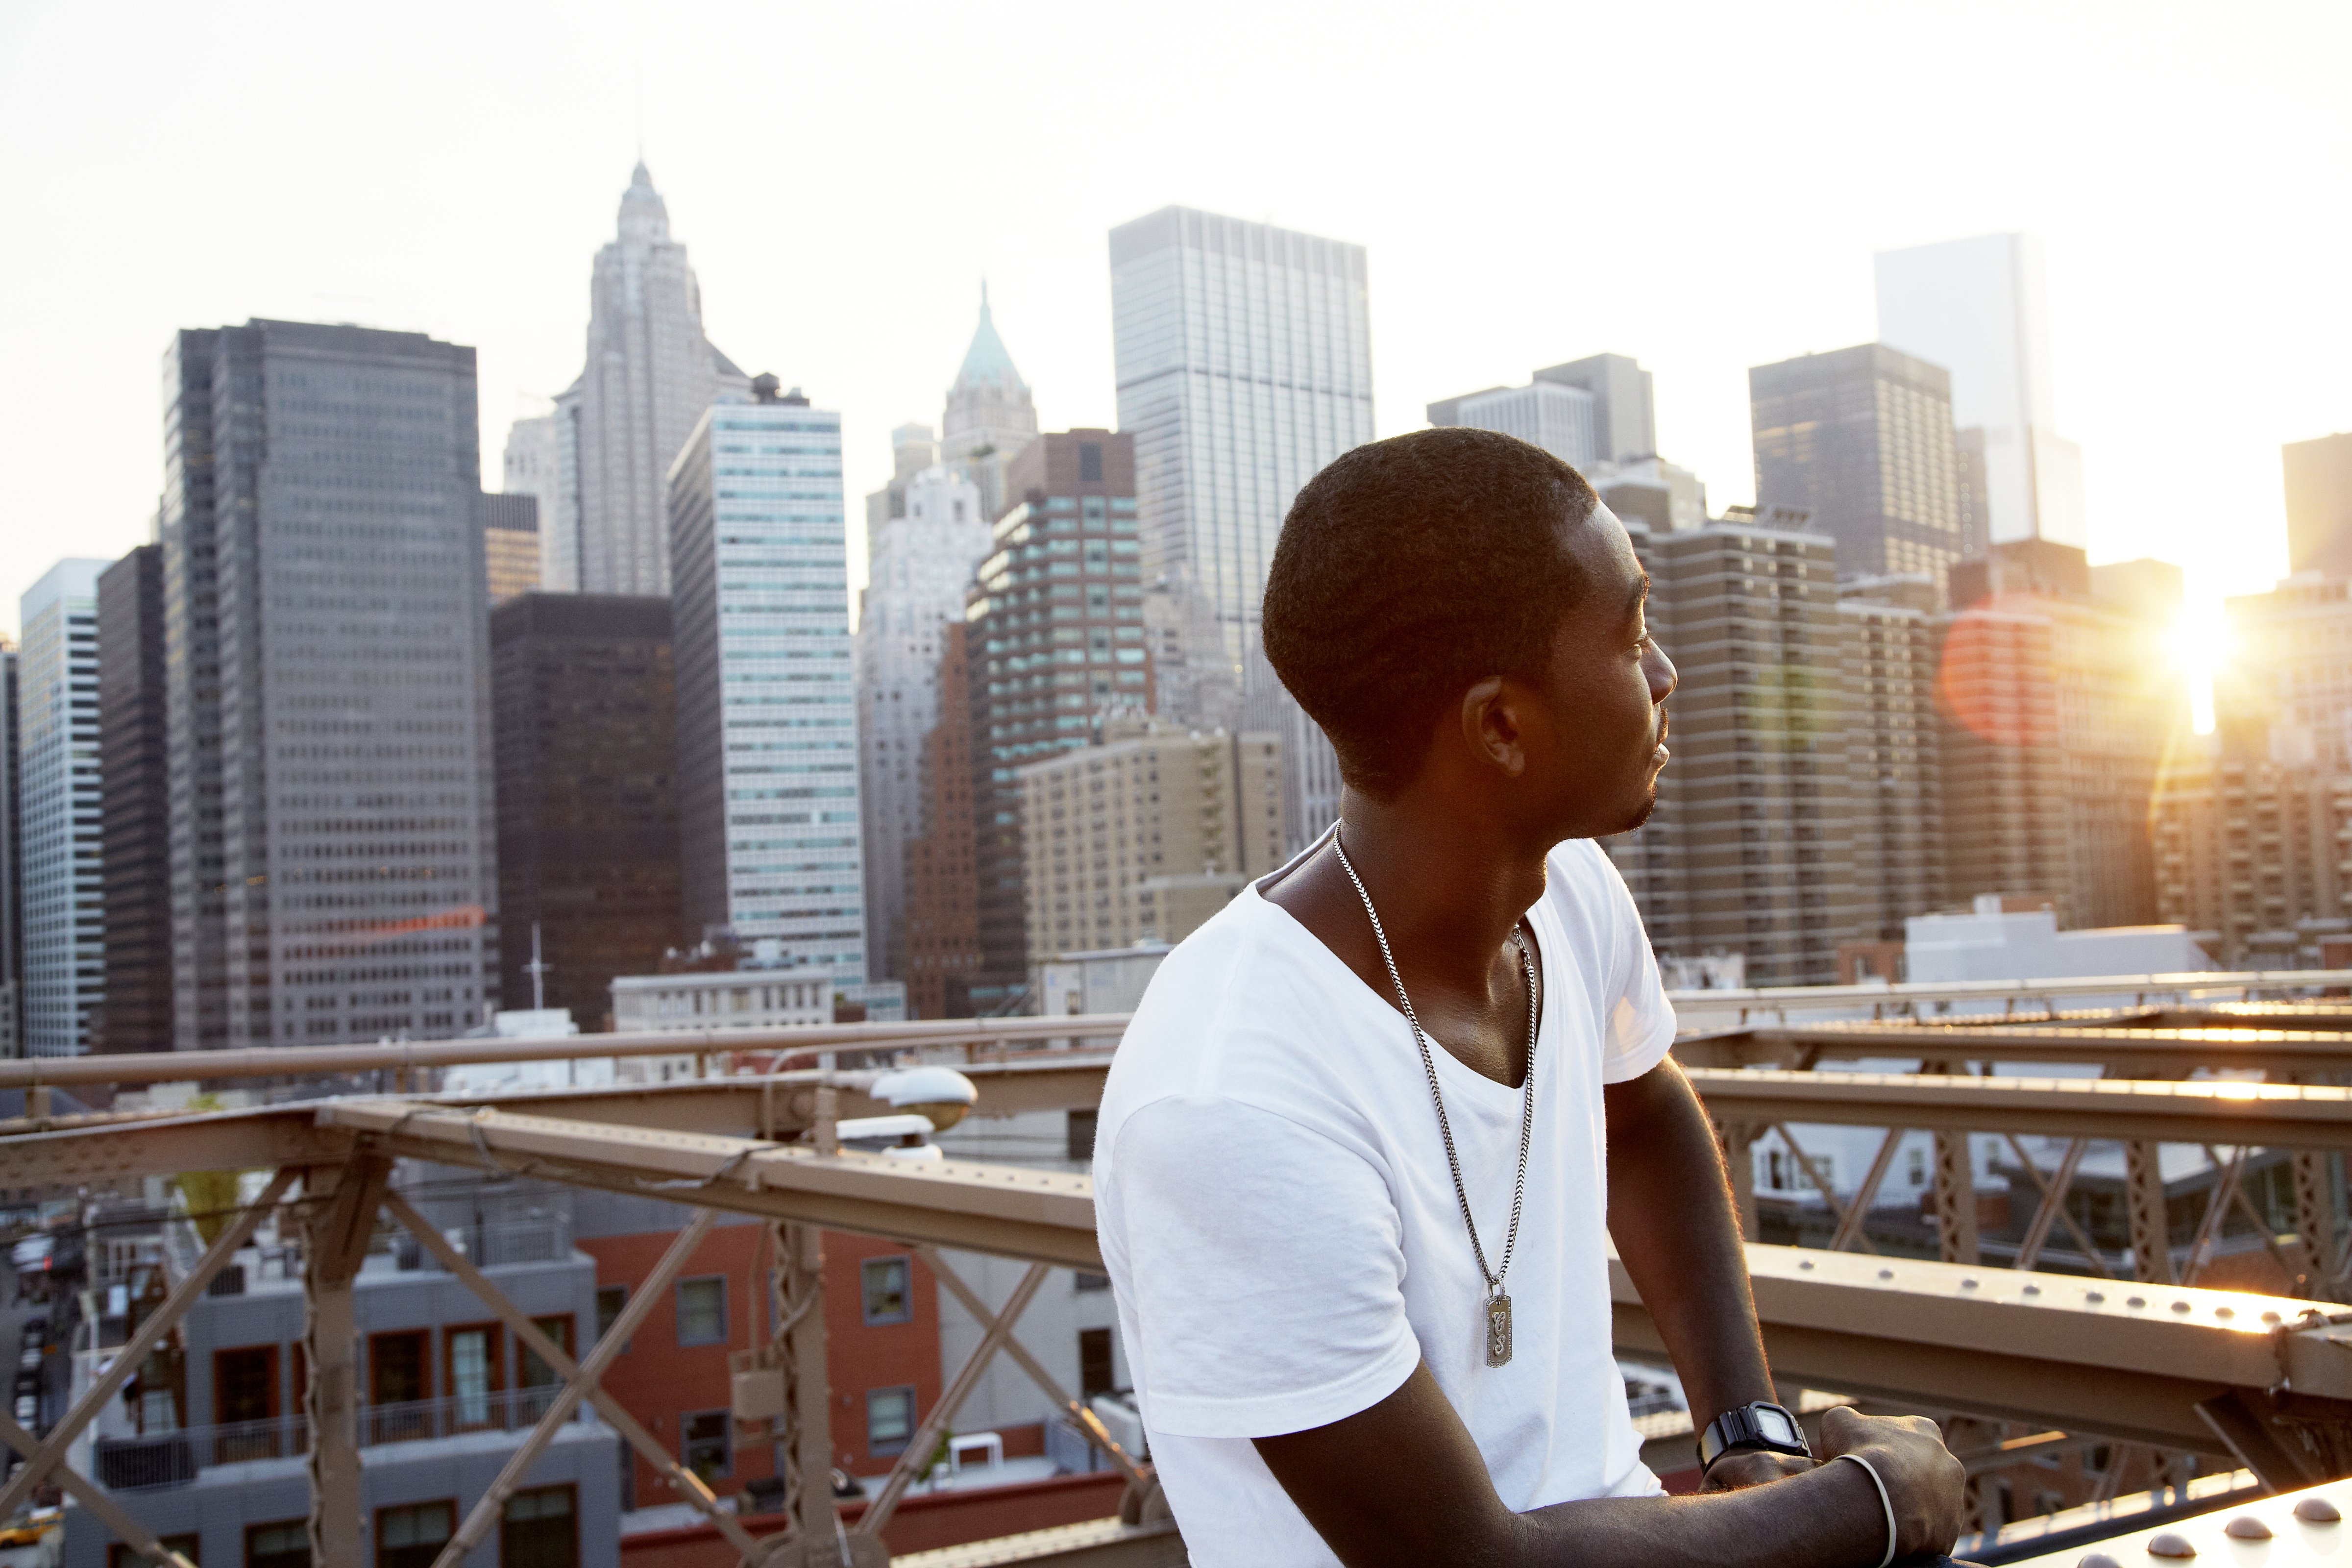 Young man on bridge with city skyline